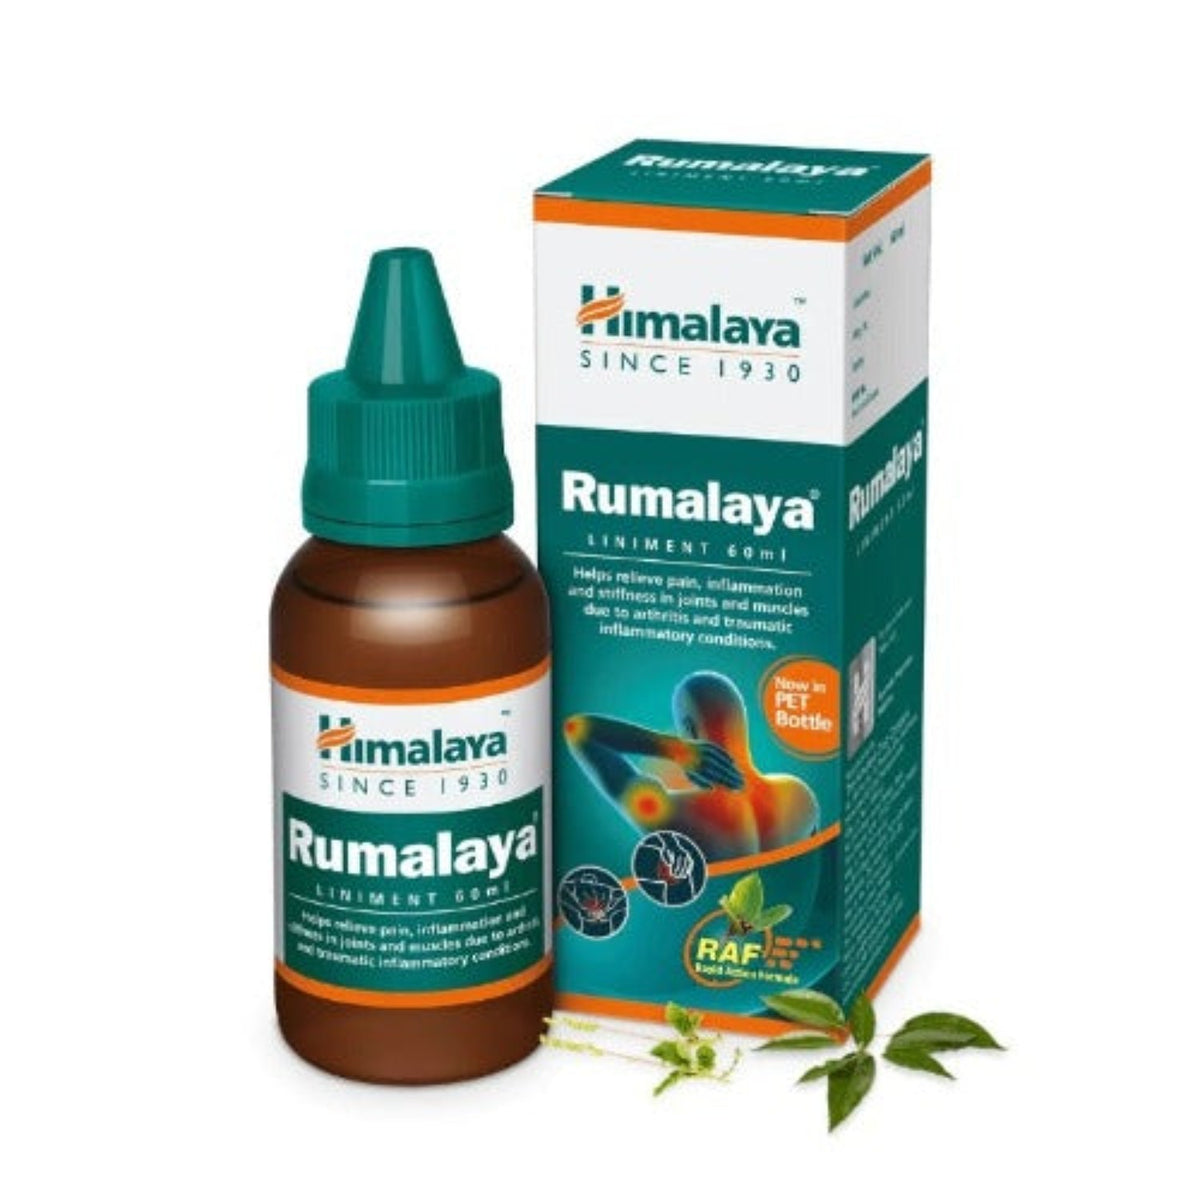 Himalaya Herbal Ayurvedic Rumalaya снимает боль линиментное масло 60 мл